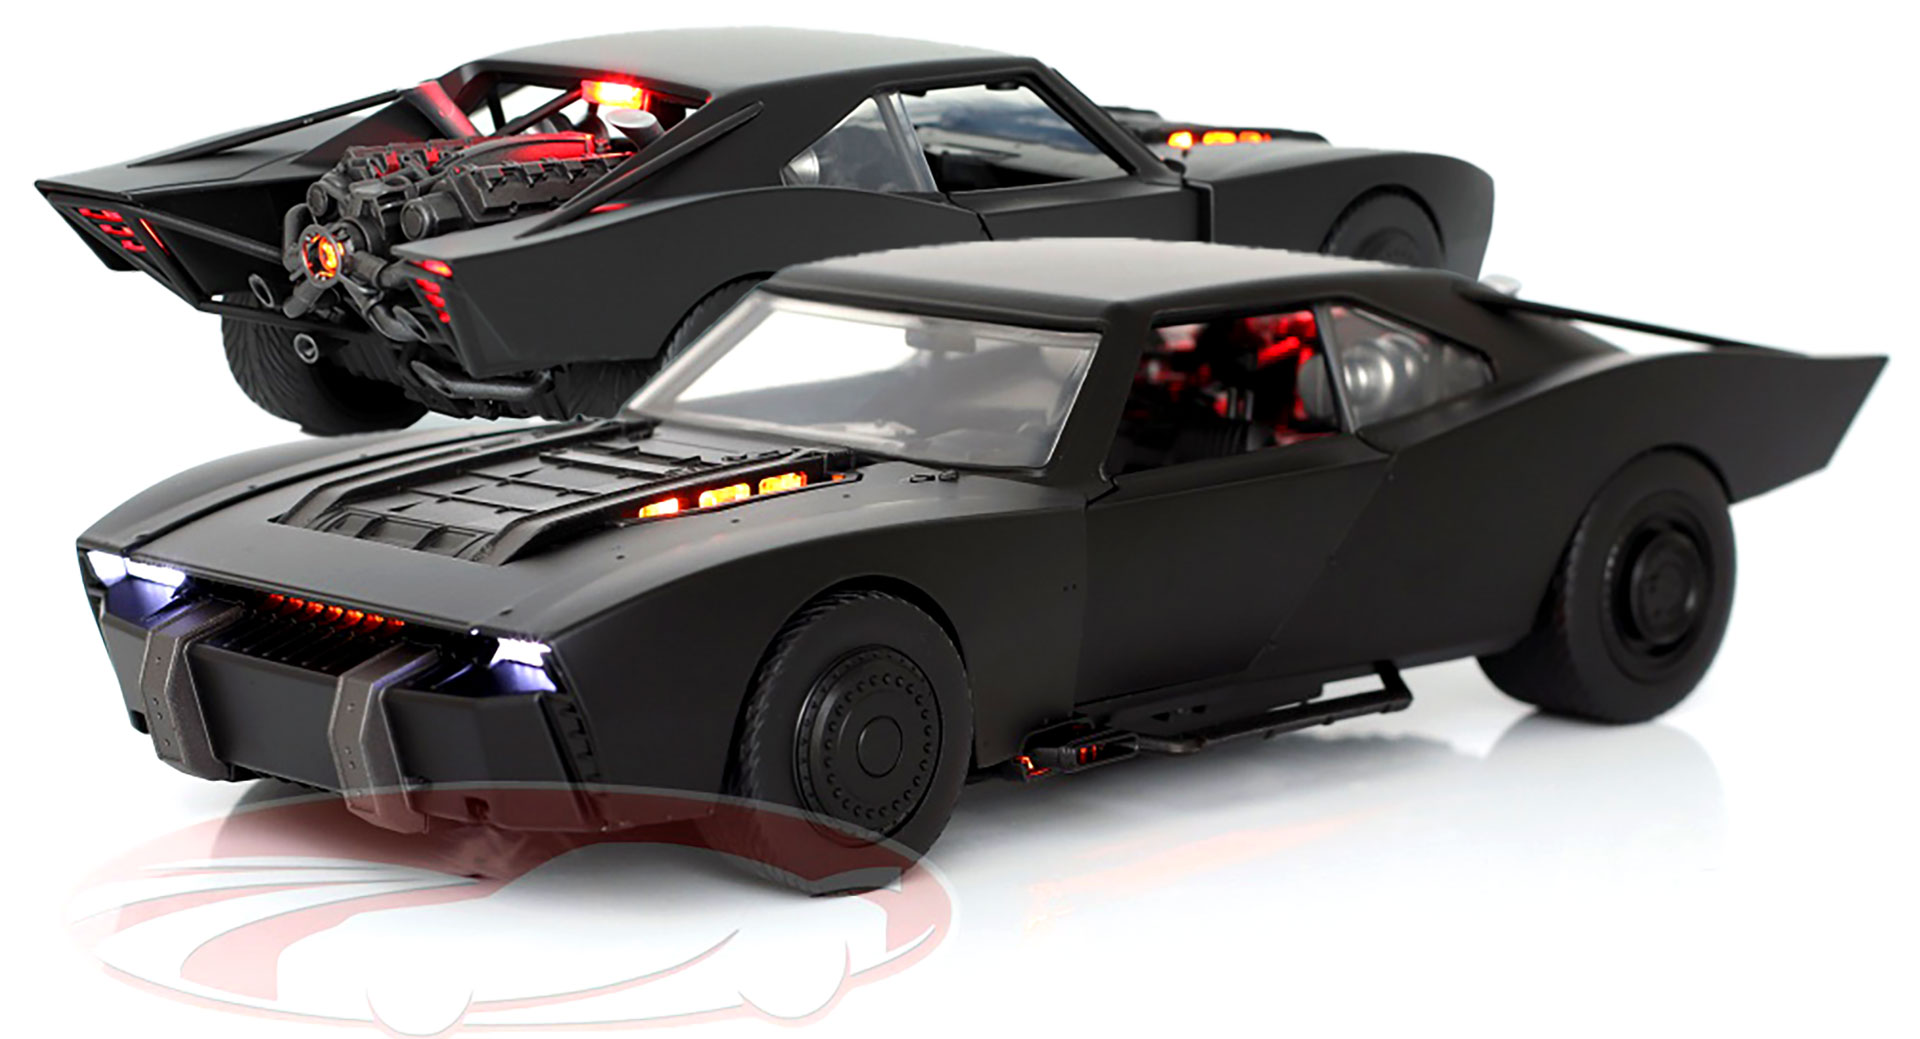 https://www.carscoops.com/wp-content/uploads/2022/02/The-Batman-Batmobile.jpg